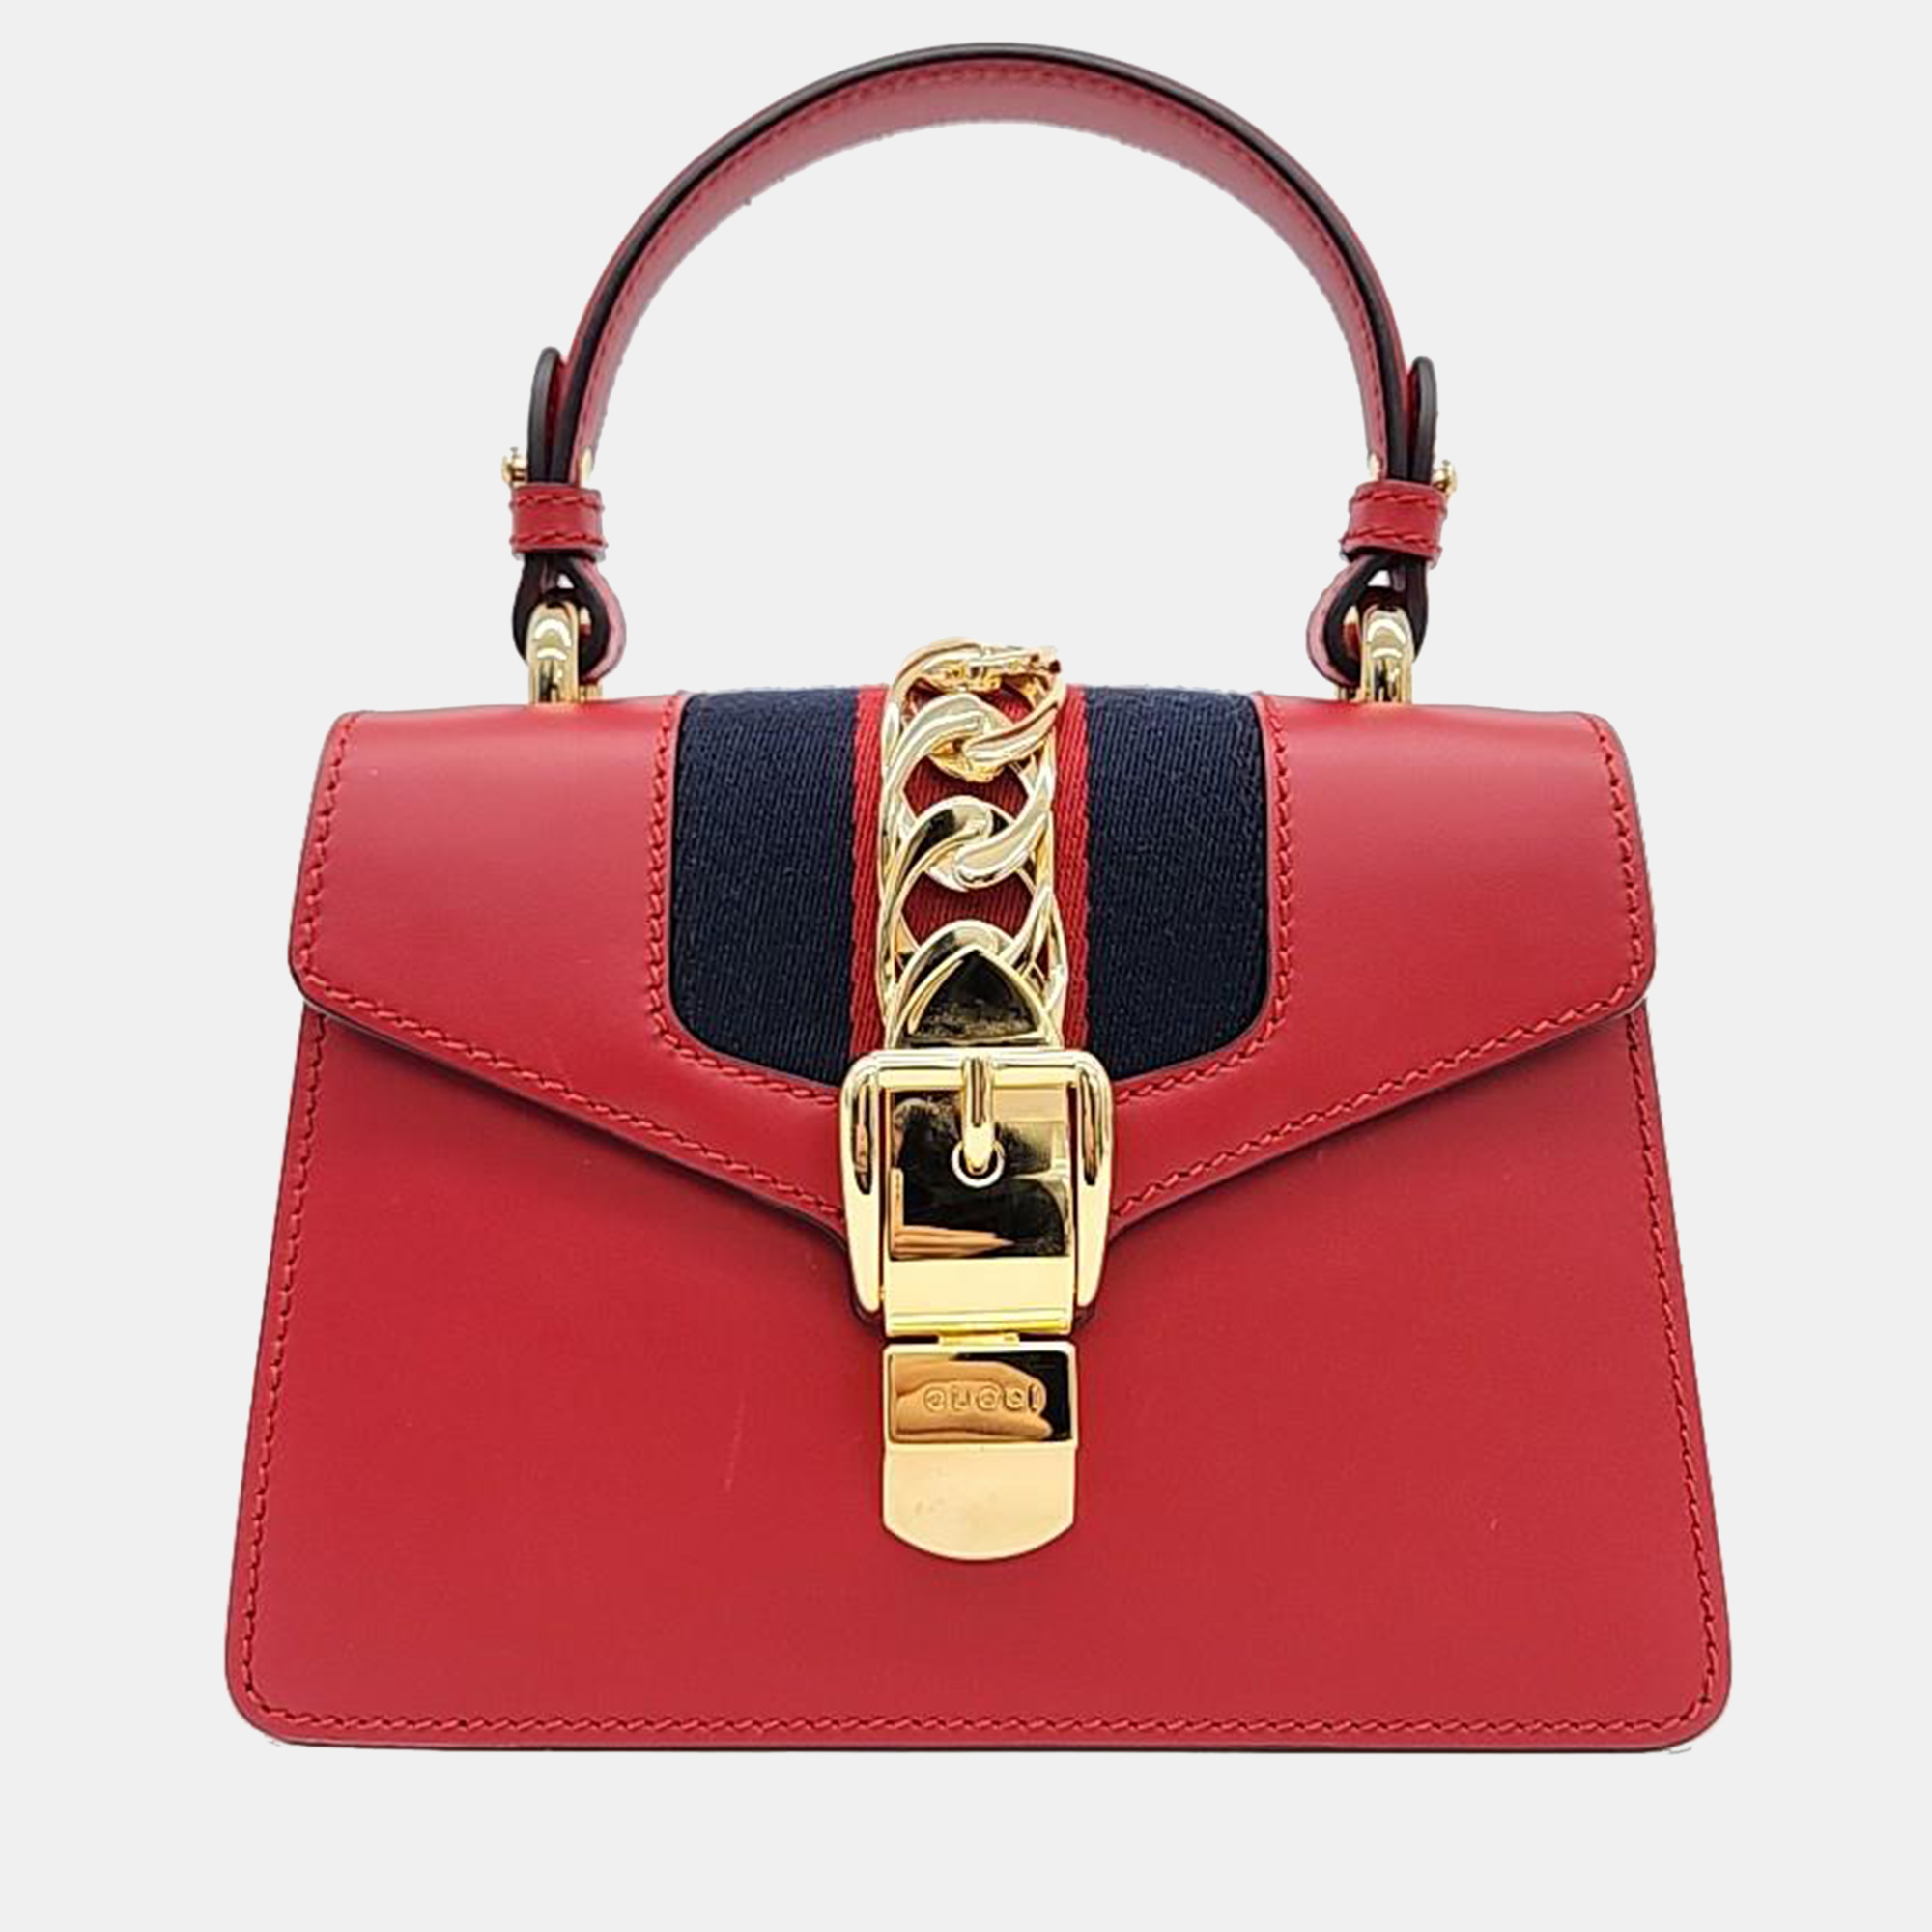 Gucci sylvie mini tote and crossbody bag (470270)